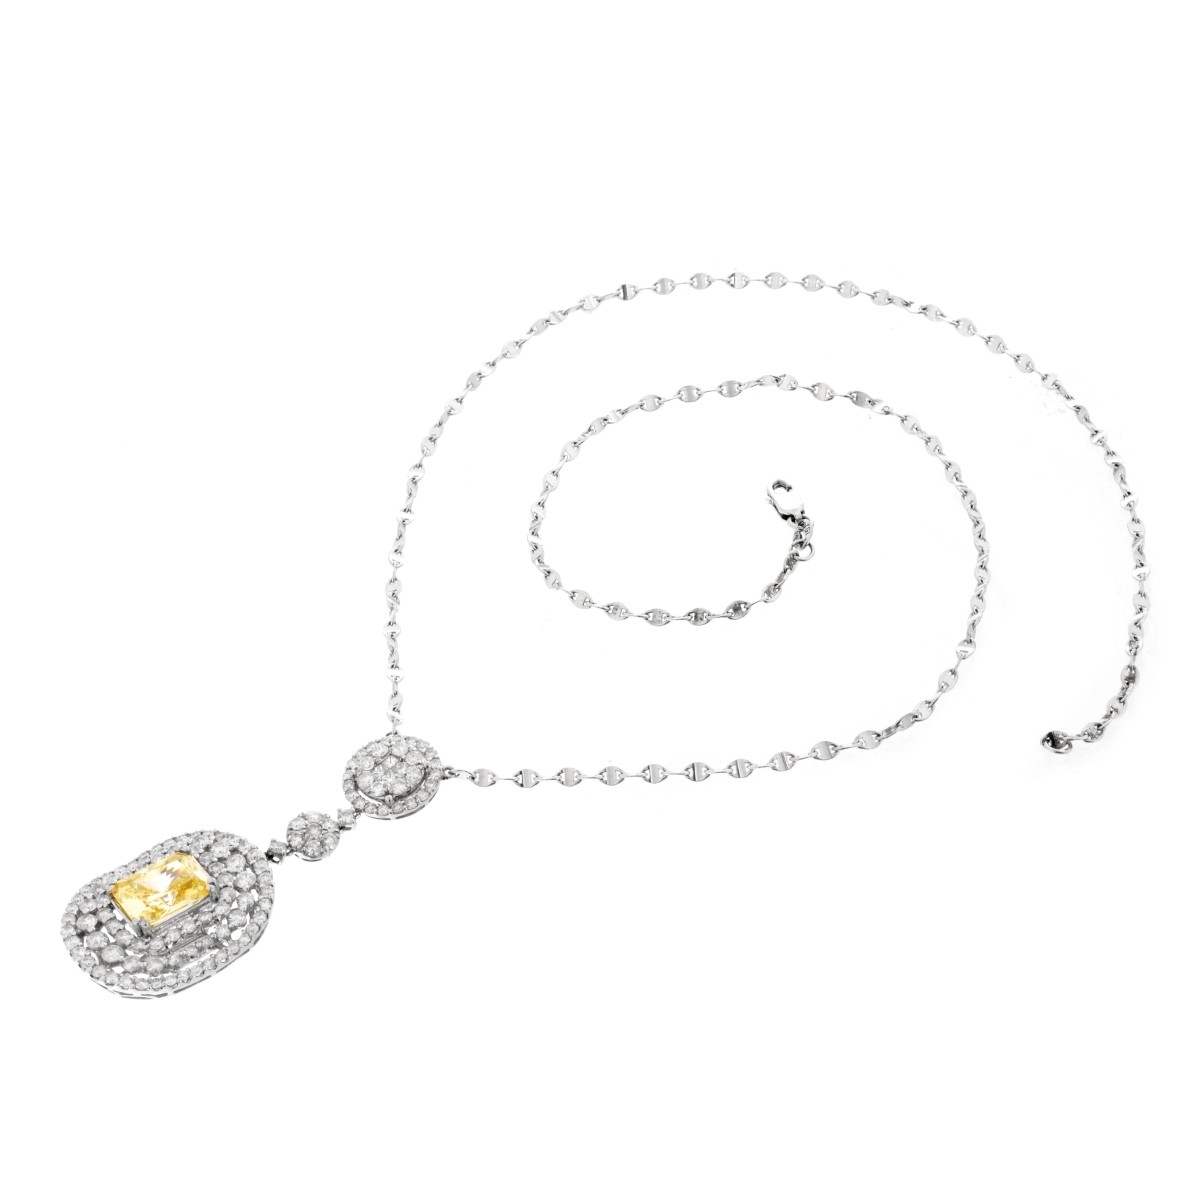 Sapphire, Diamond and 18K Pendant Necklace